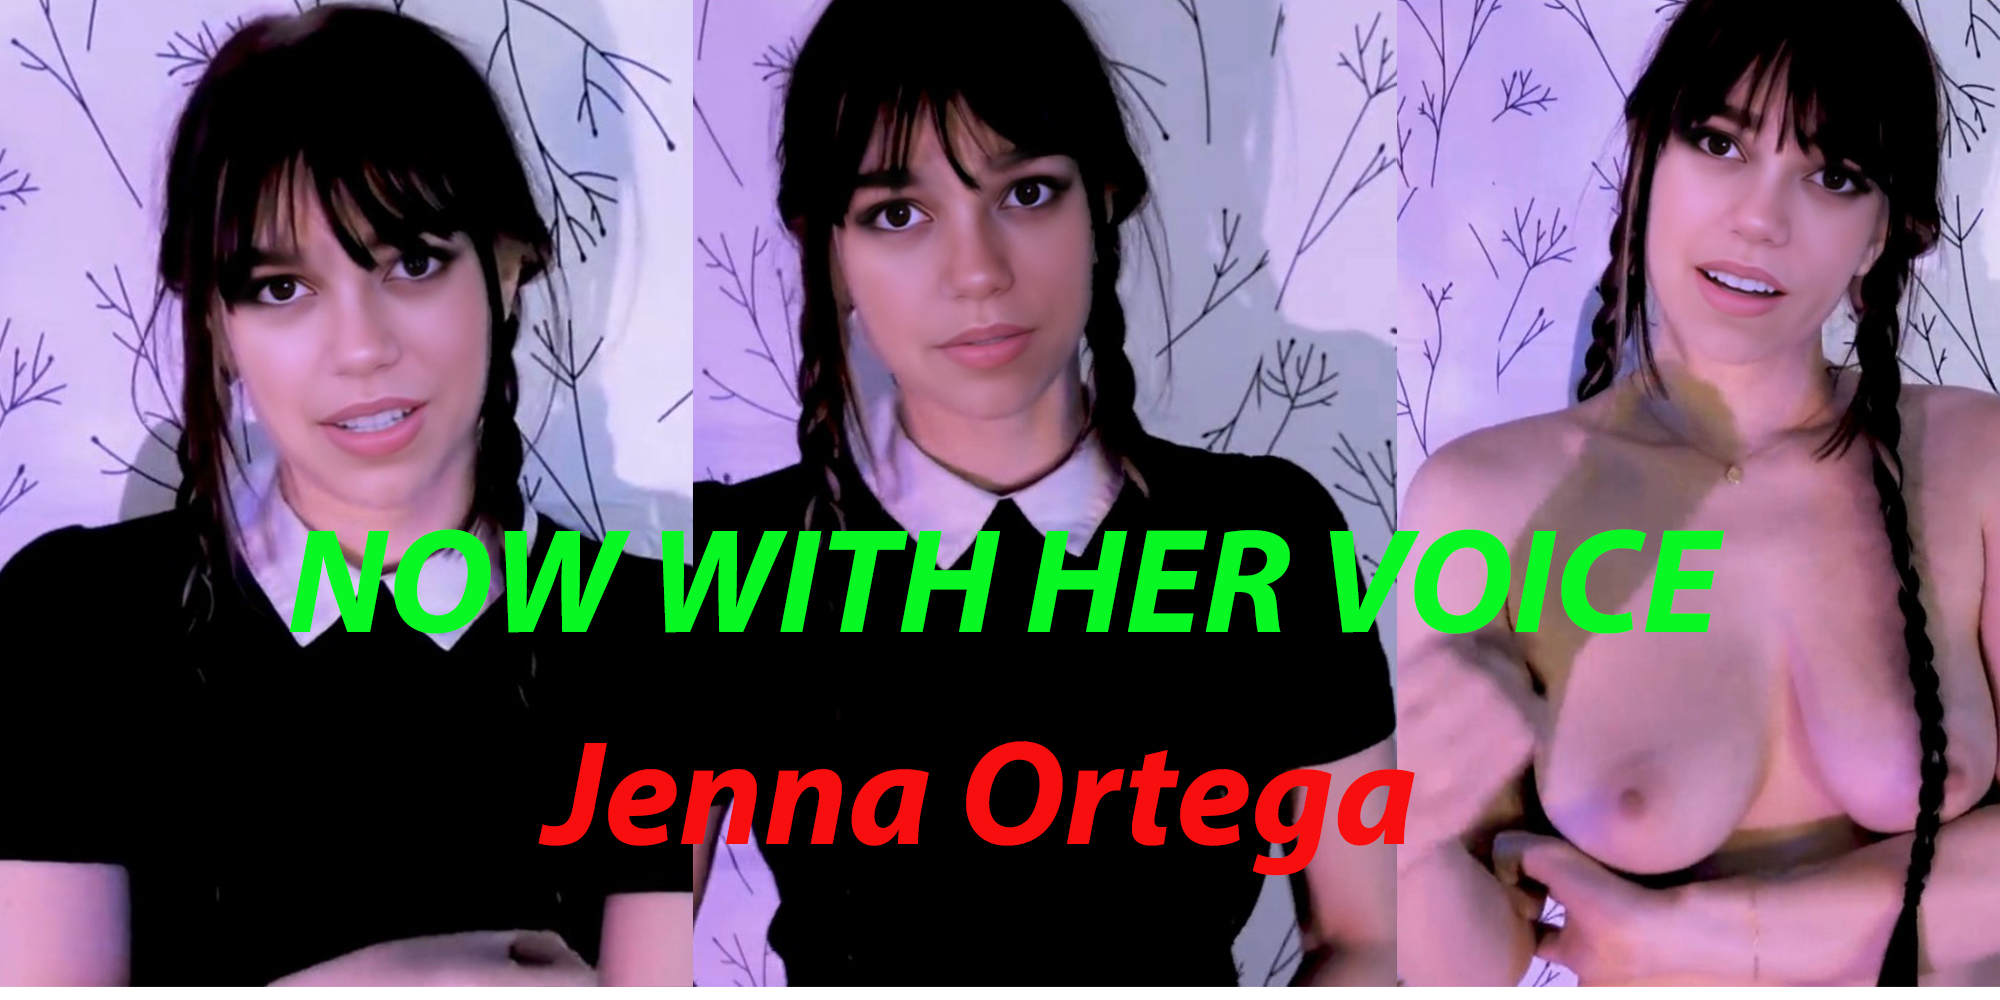 Jenna Ortega joi (swap voice test)